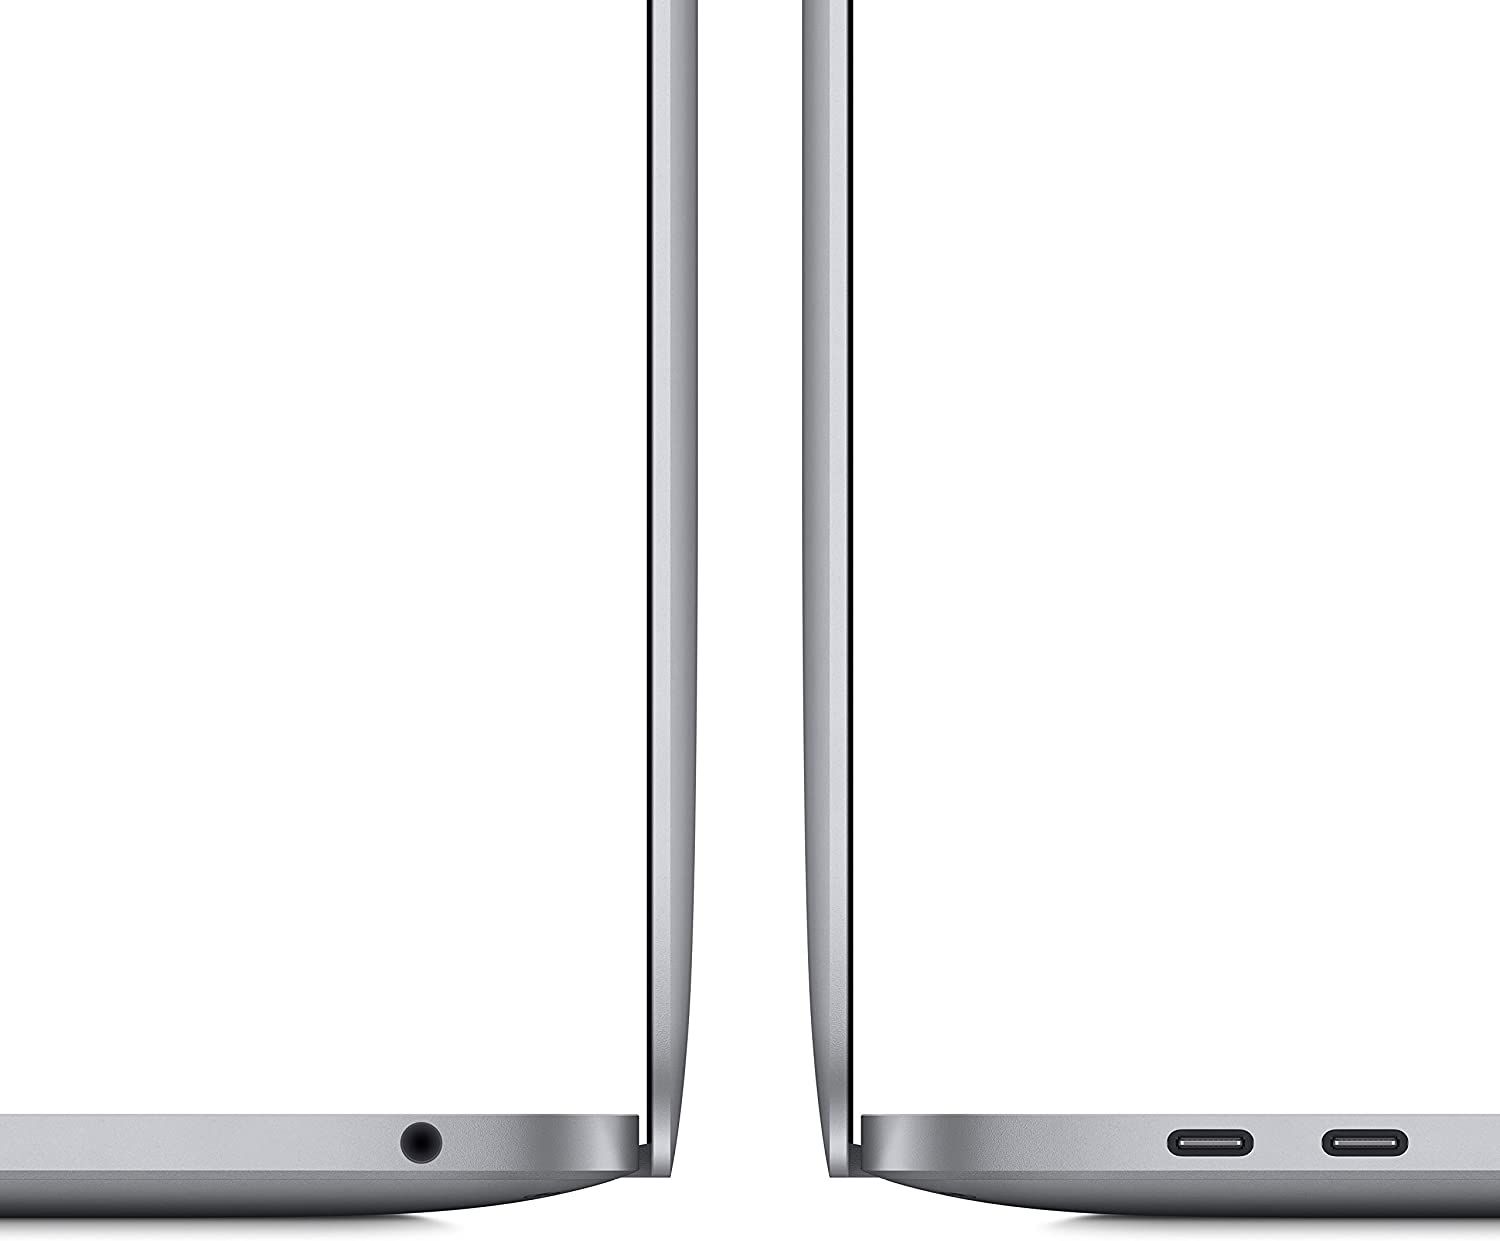 Apple MacBook Pro 13-inch (2020) ports